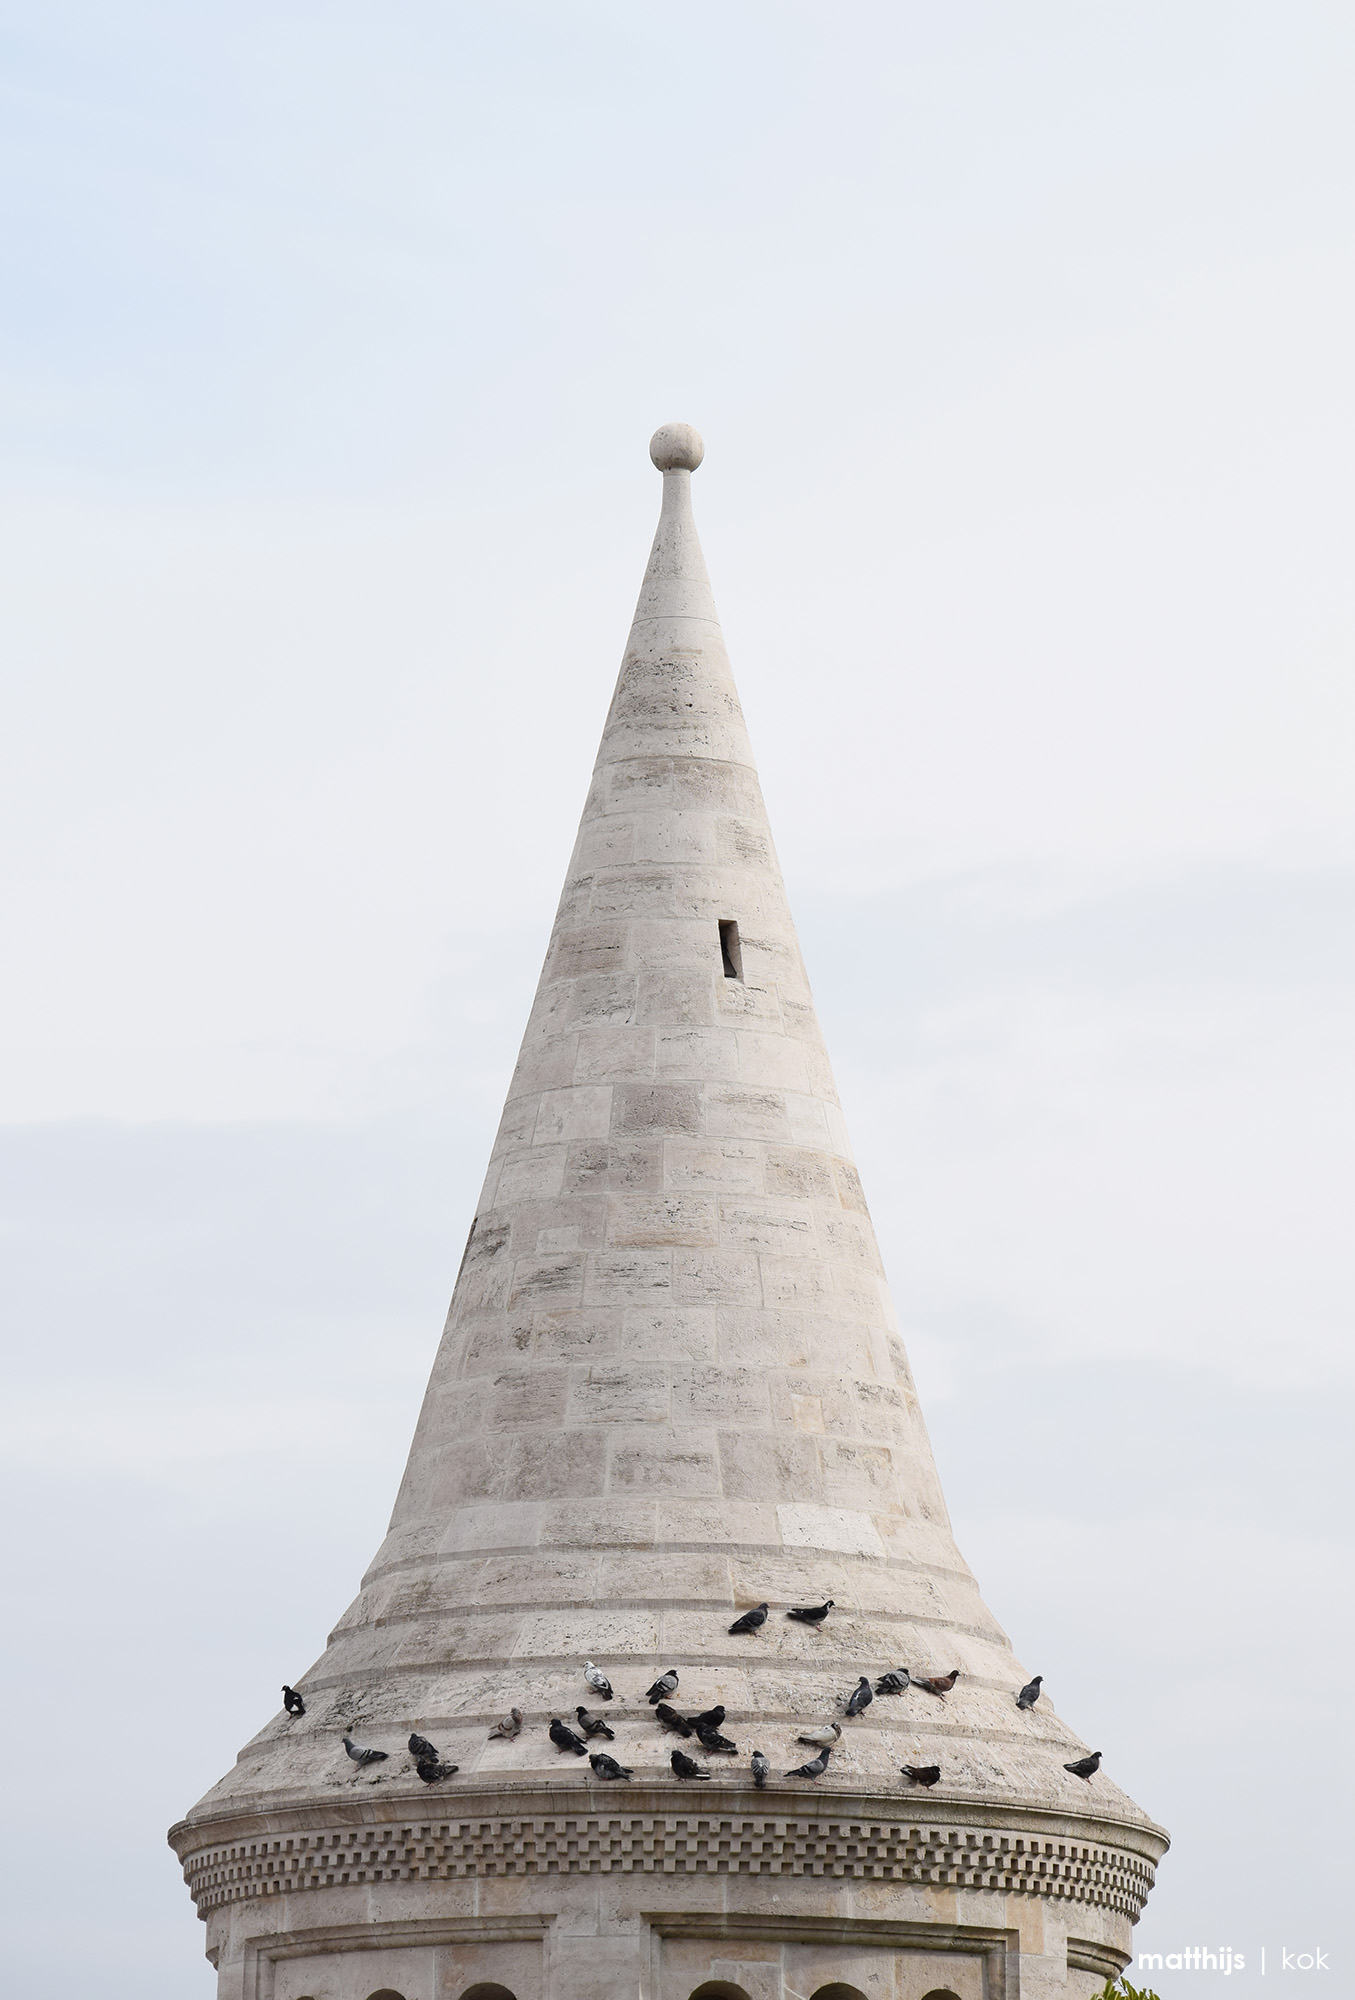 Fairytale tower of Fisherman's Bastion - Halaszbastya, Budapest | Photo by Matthijs Kok